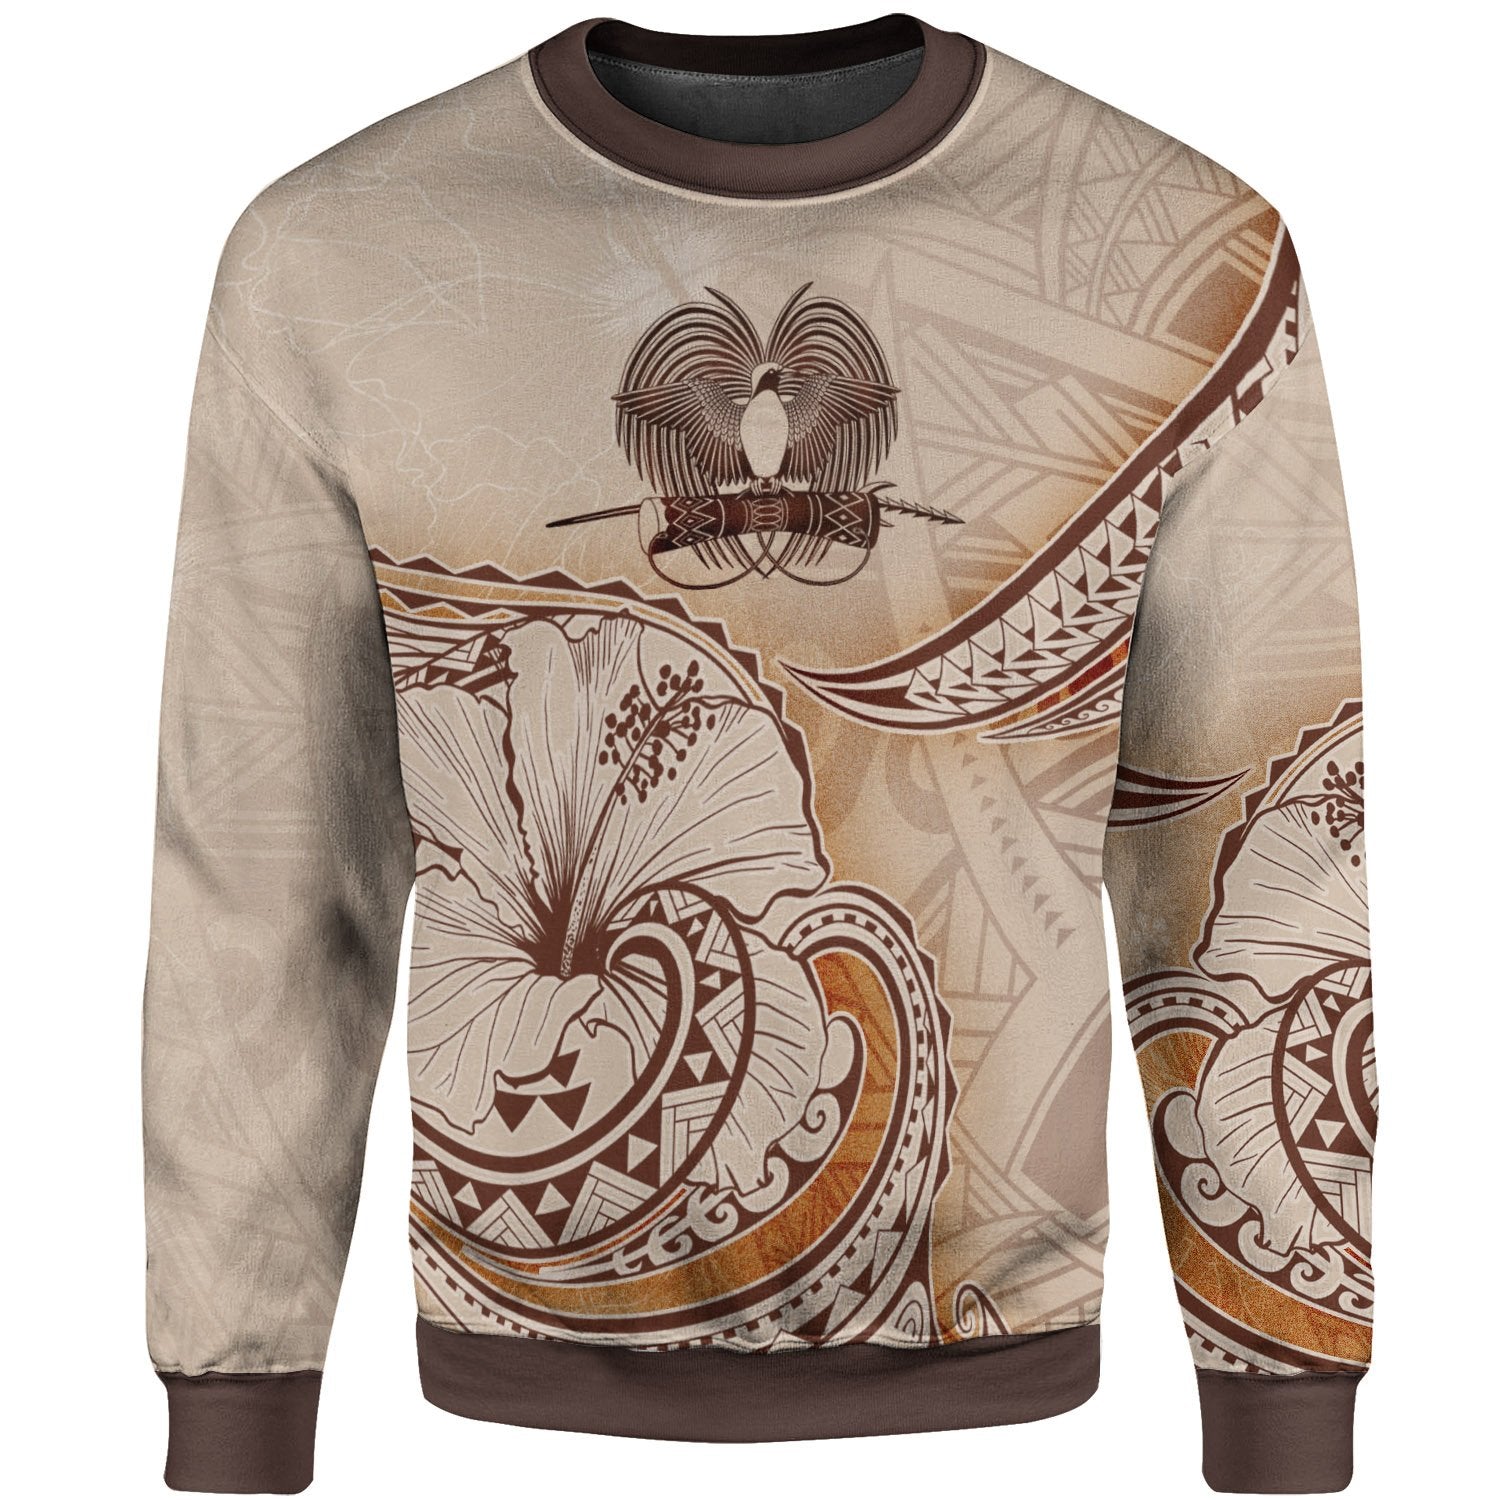 papua-new-guinea-sweatshirt-hibiscus-flowers-vintage-style